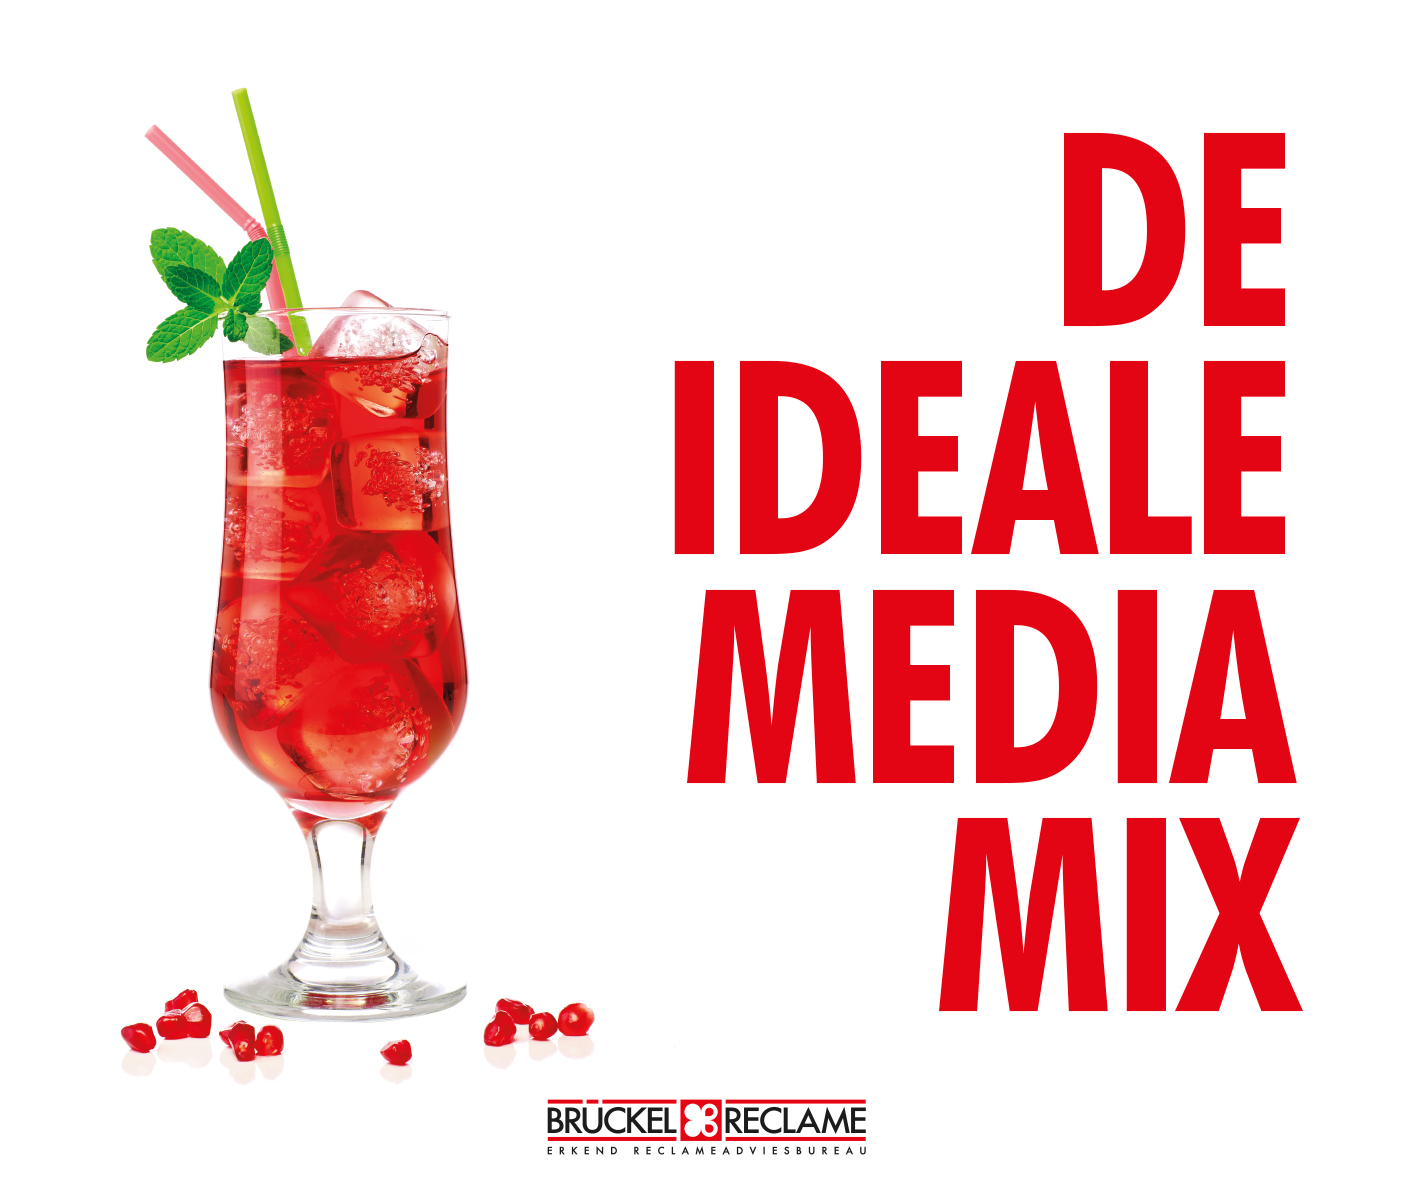 De ideale Media mix